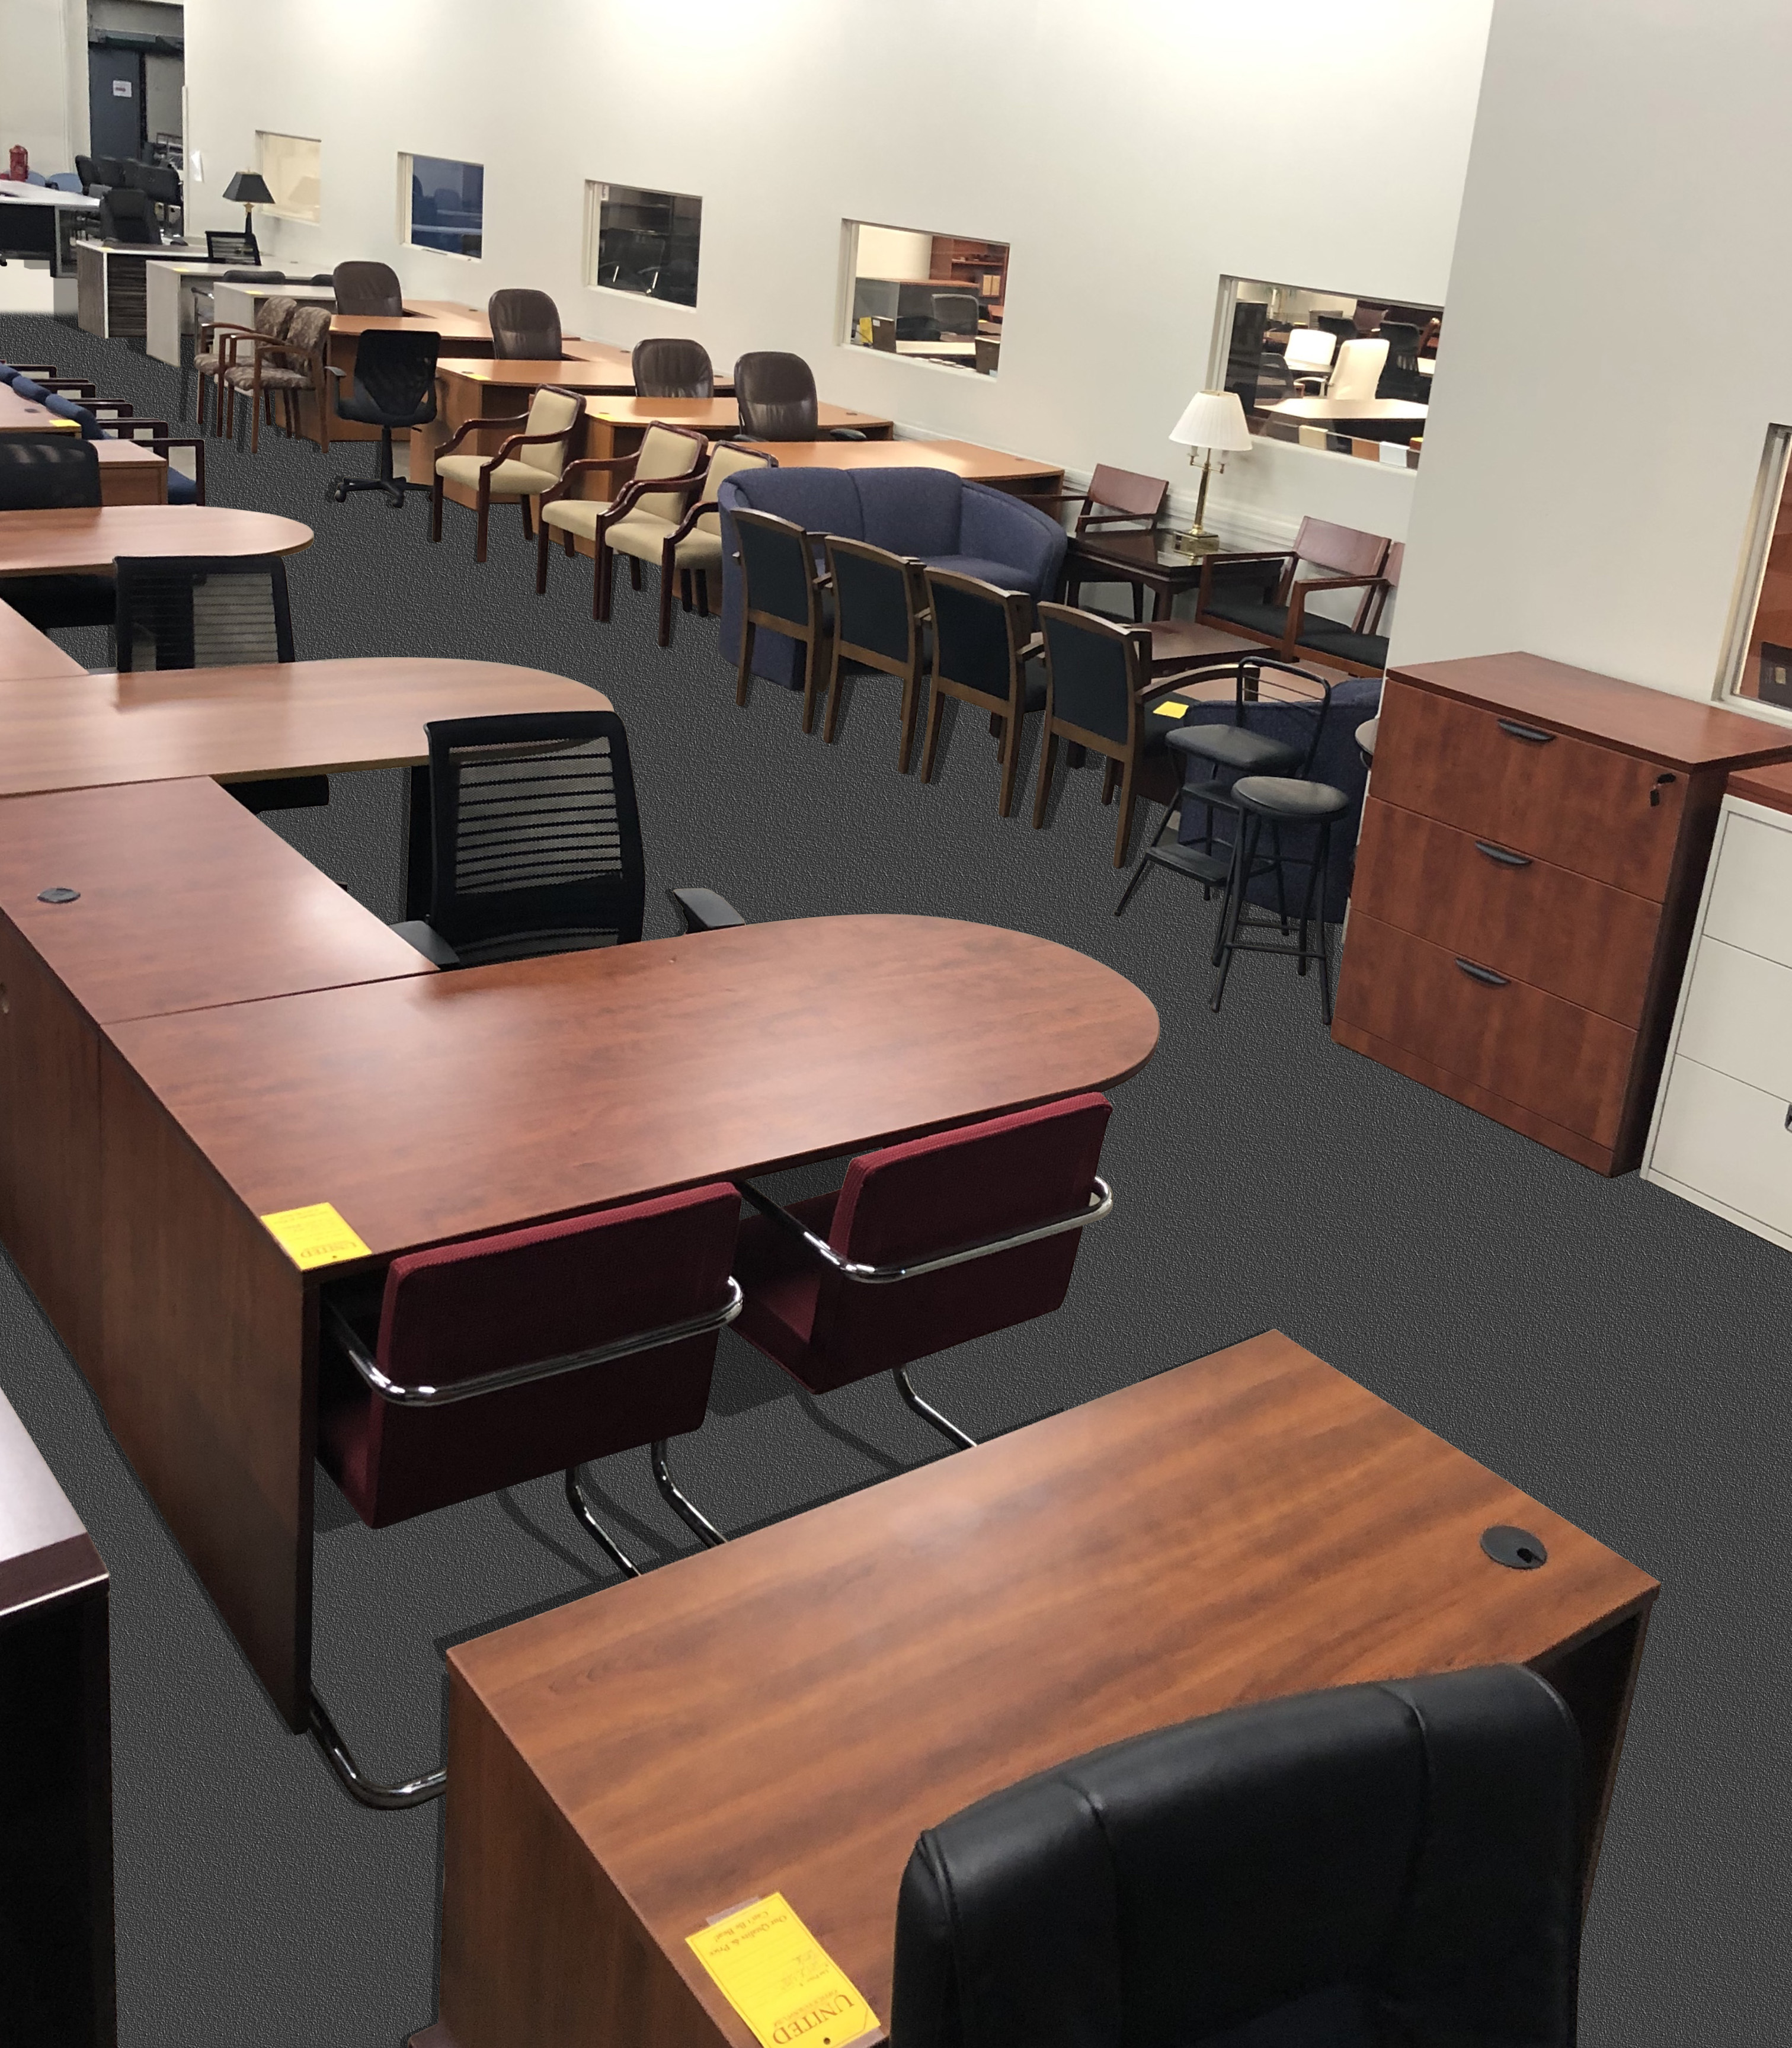 https://corporateofficefurniturelouisville.com/wp-content/uploads/2019/10/Pre-owned-Warehouse-Showroom-Student-Desks-L-Desks-Lateral-Files-Metal-Laminate-Reception-Furniture-and-more.jpg